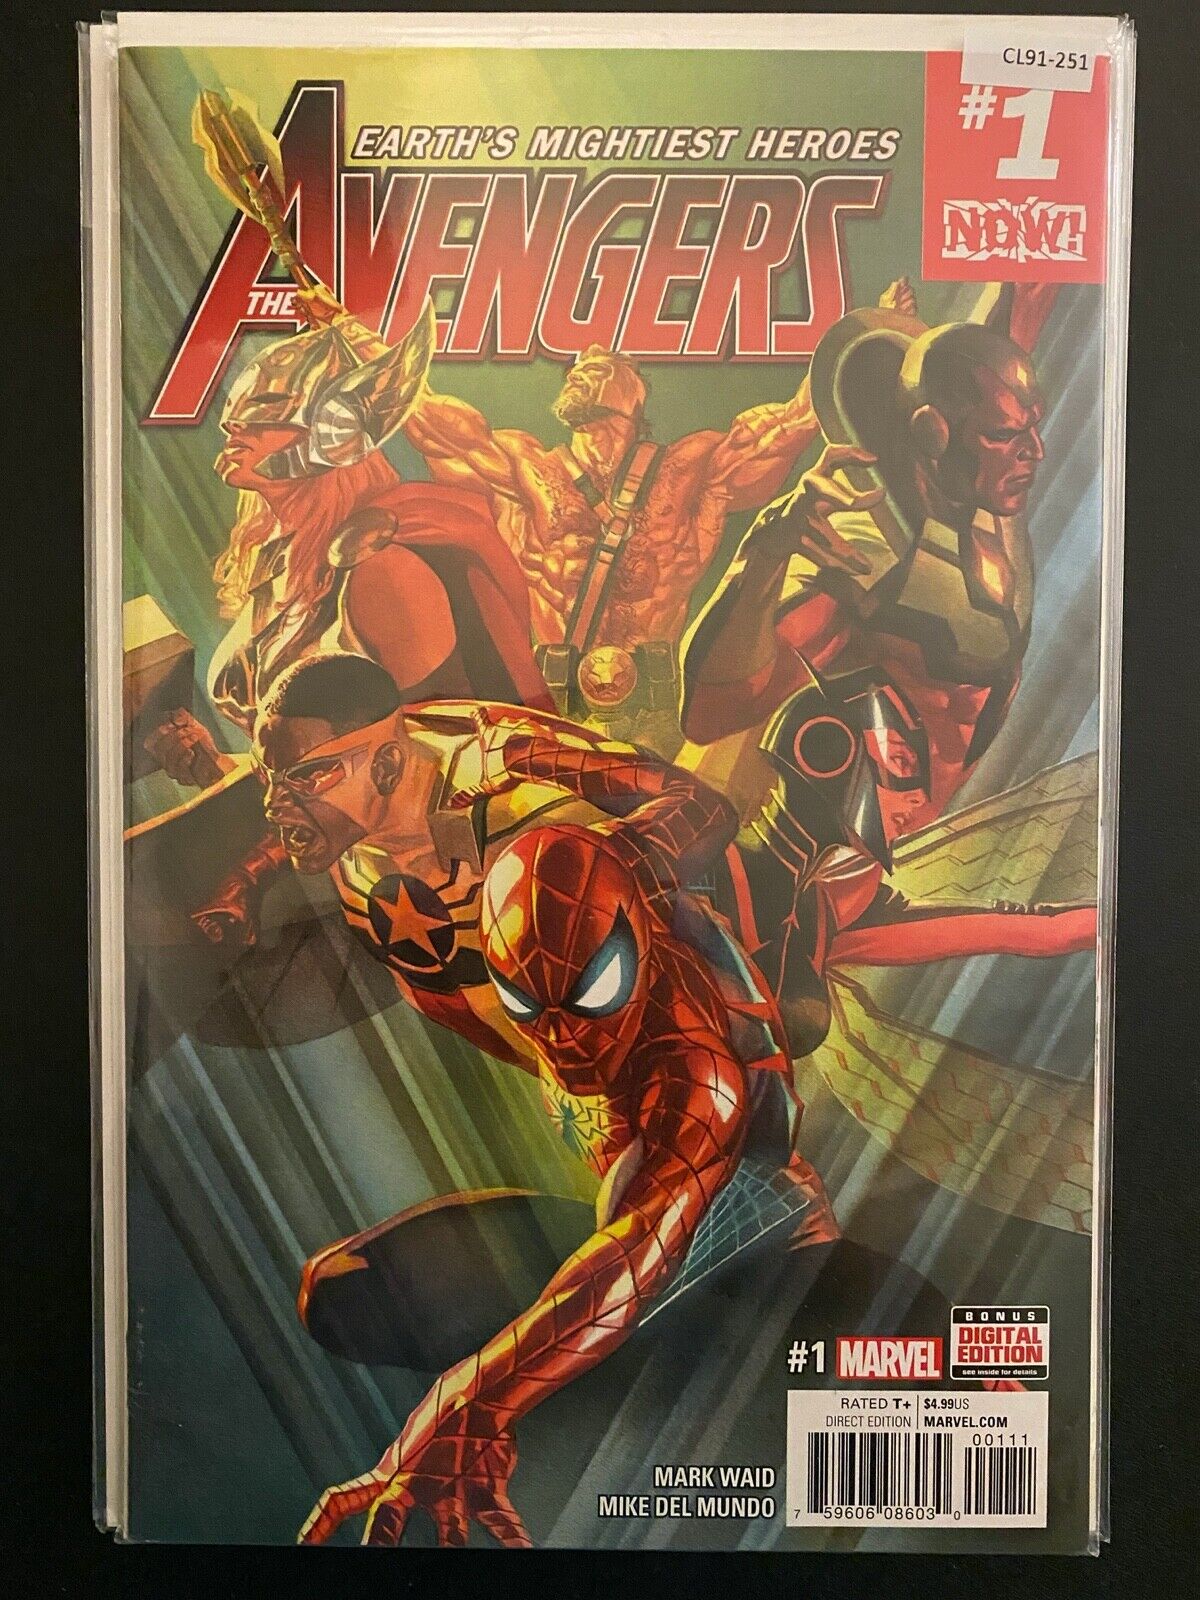 Avengers vol.6 #1 2017 High Grade 9.4 Marvel Comic Book CL91-251